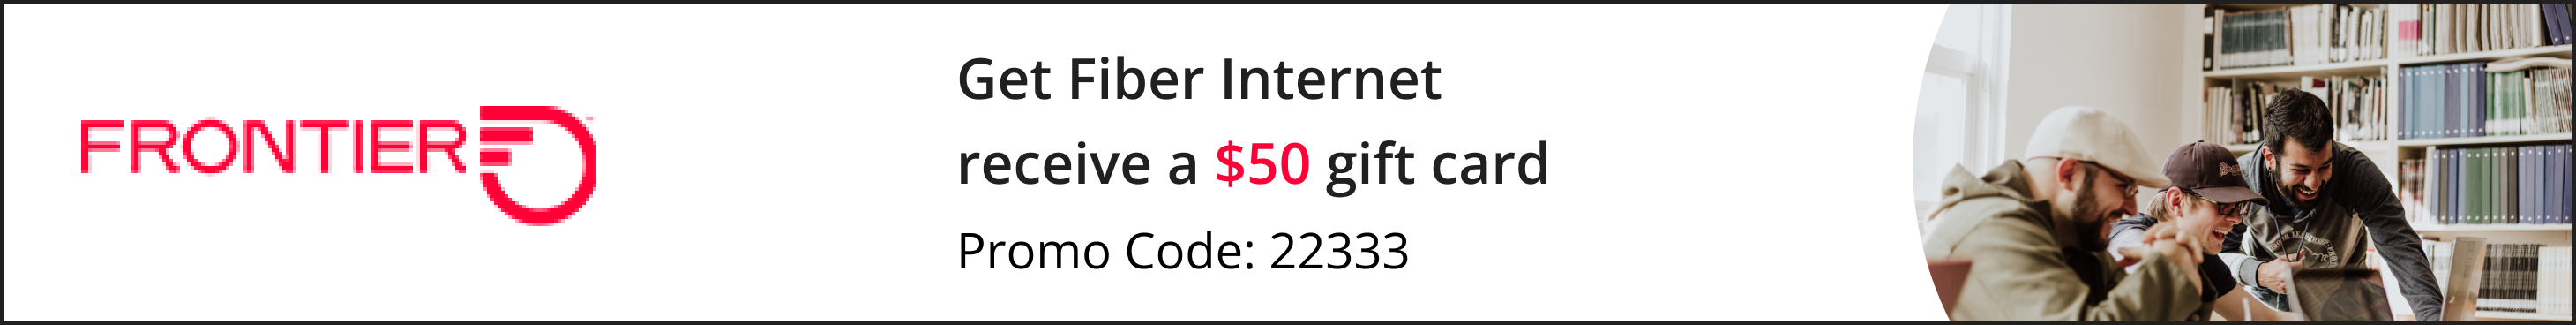 Ad for Frontier Internet referral program